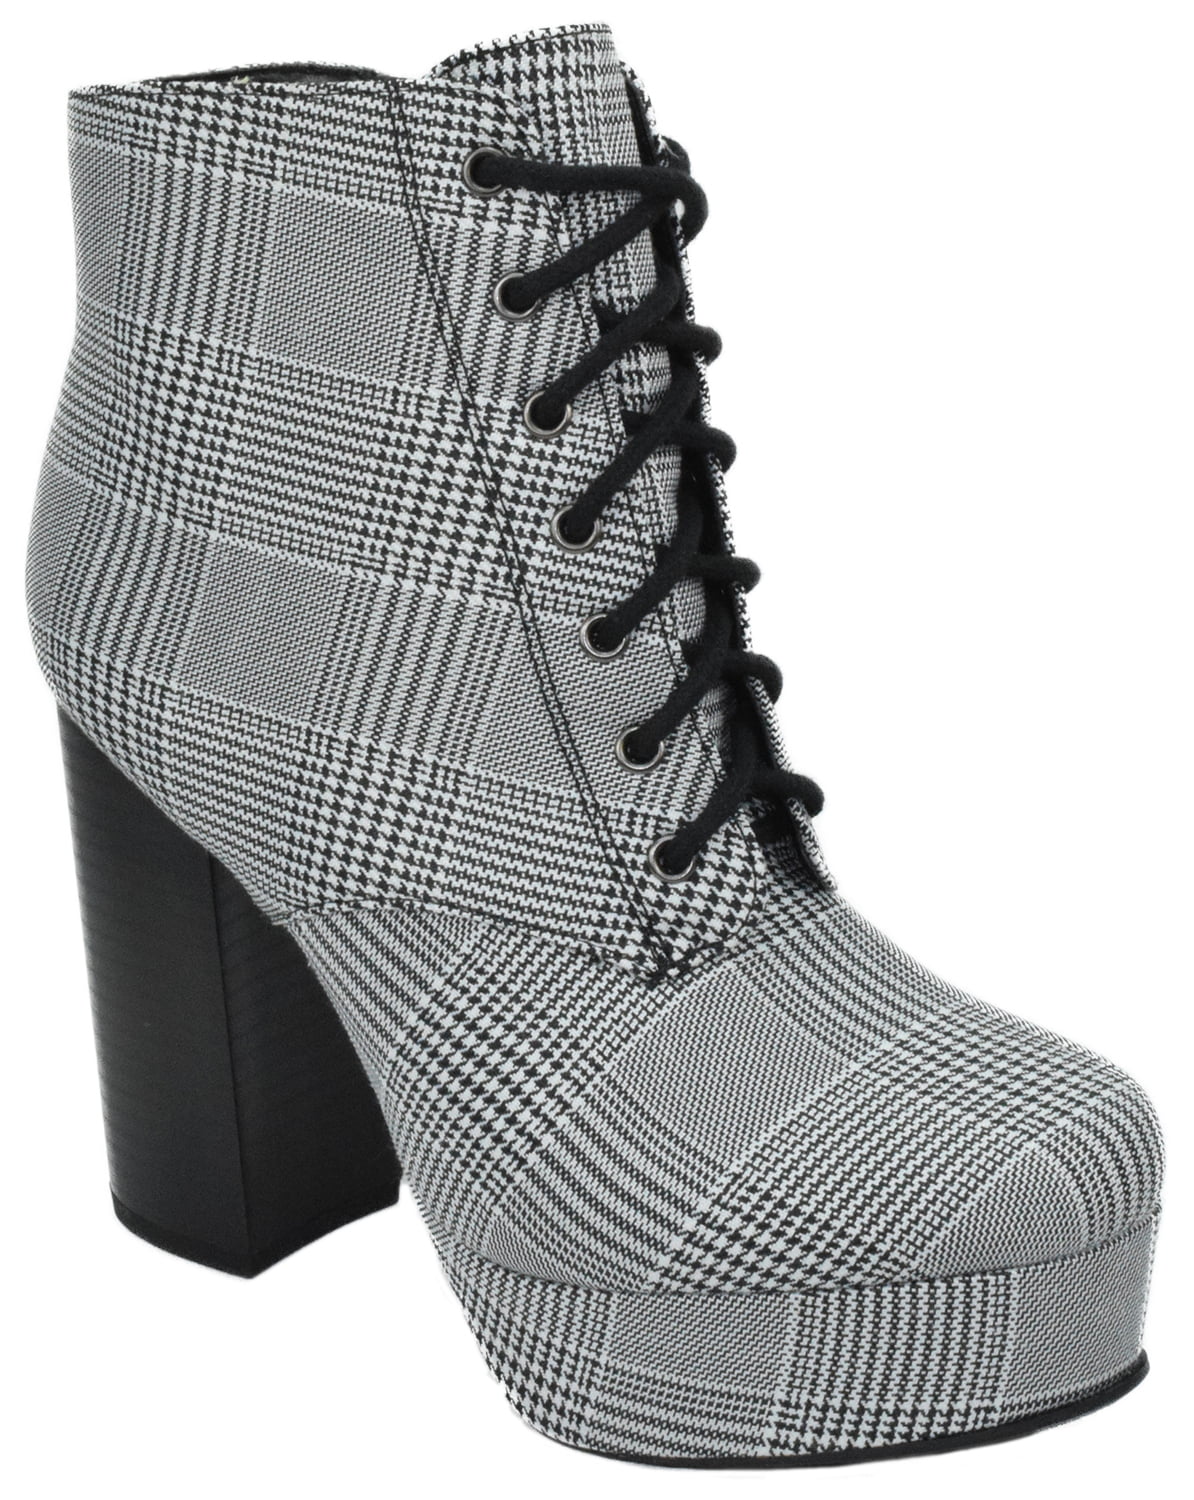 Women Platform Ankle Boots Round Toe High Heels Booties Black White Grid Pattern 